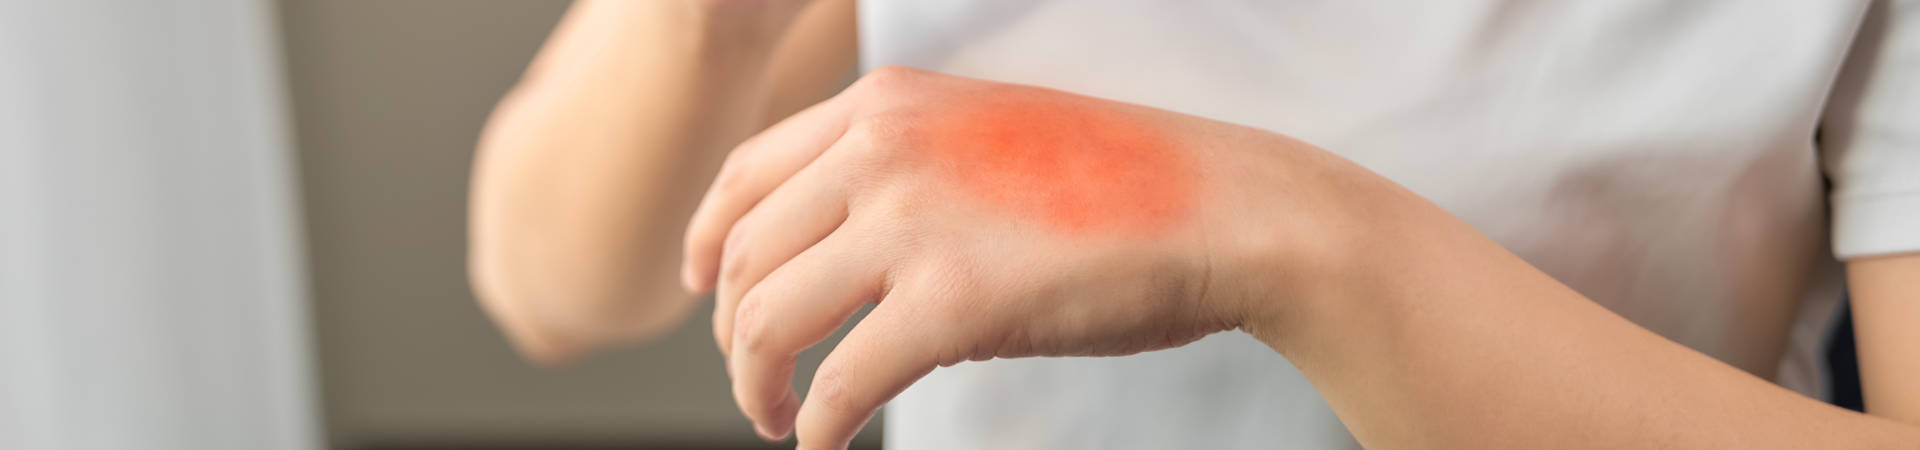 Woman hand has red skin rash itch